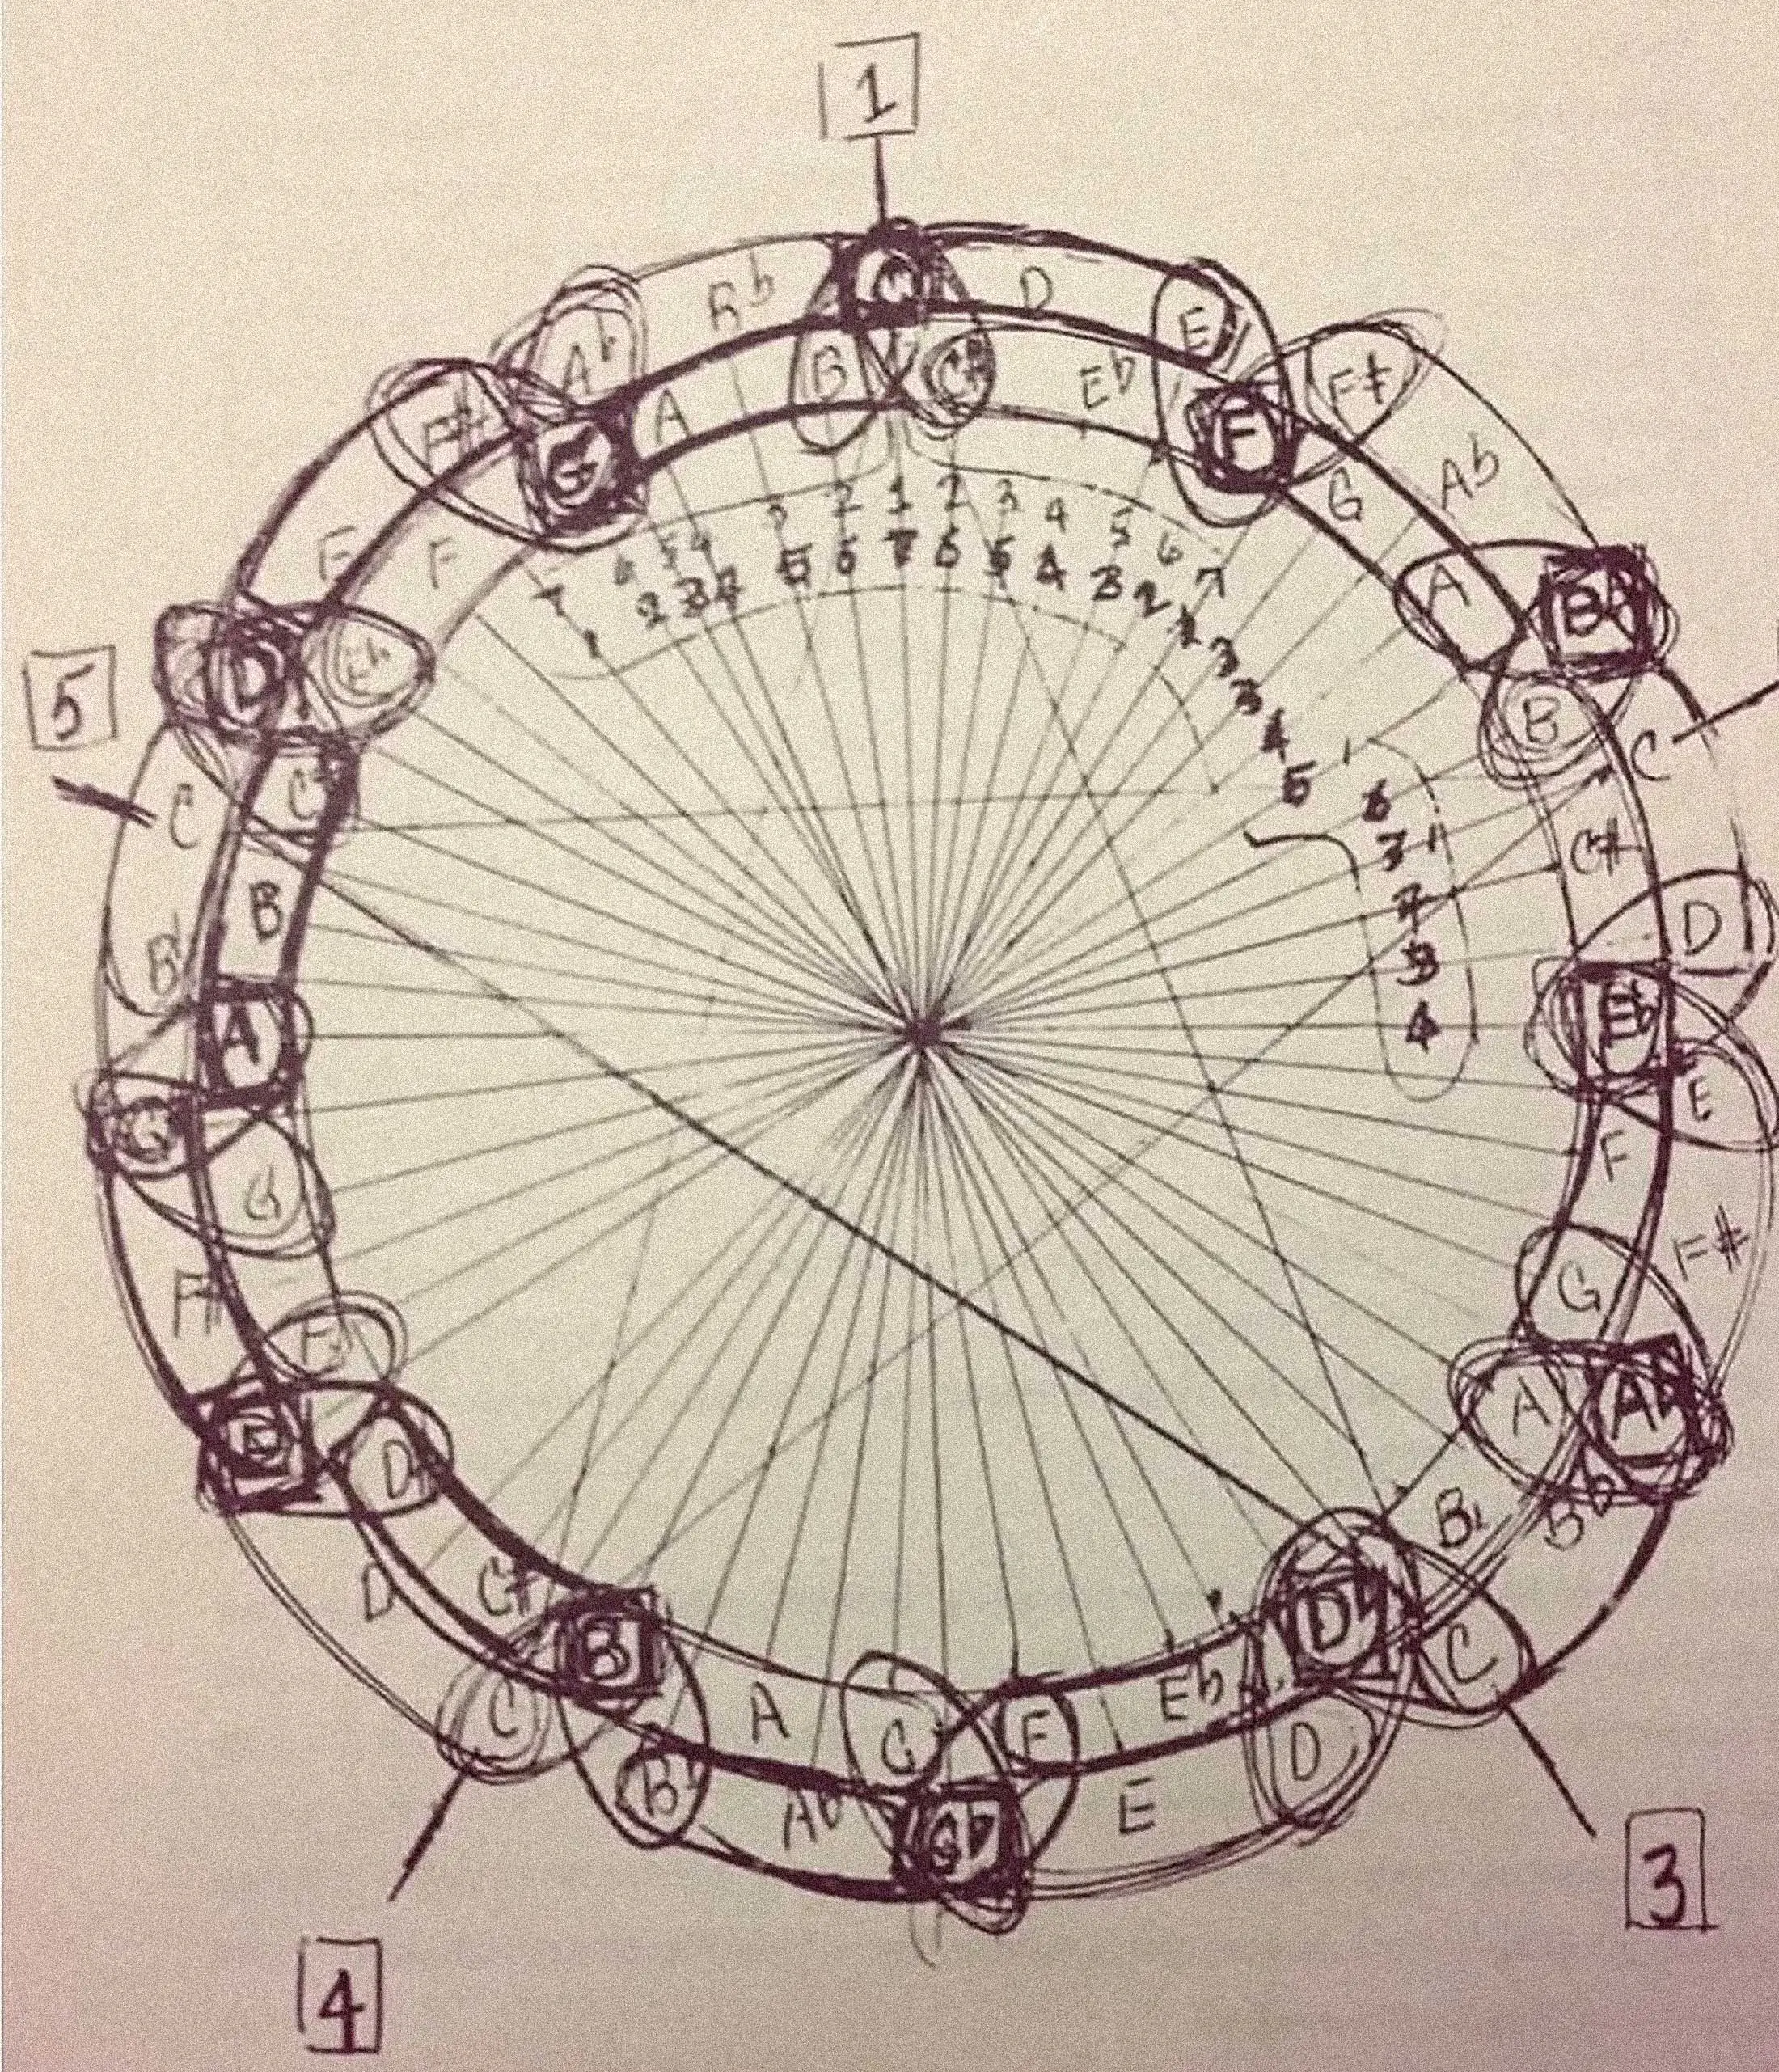 John Coltrane's complex circular pencil diagram of his music